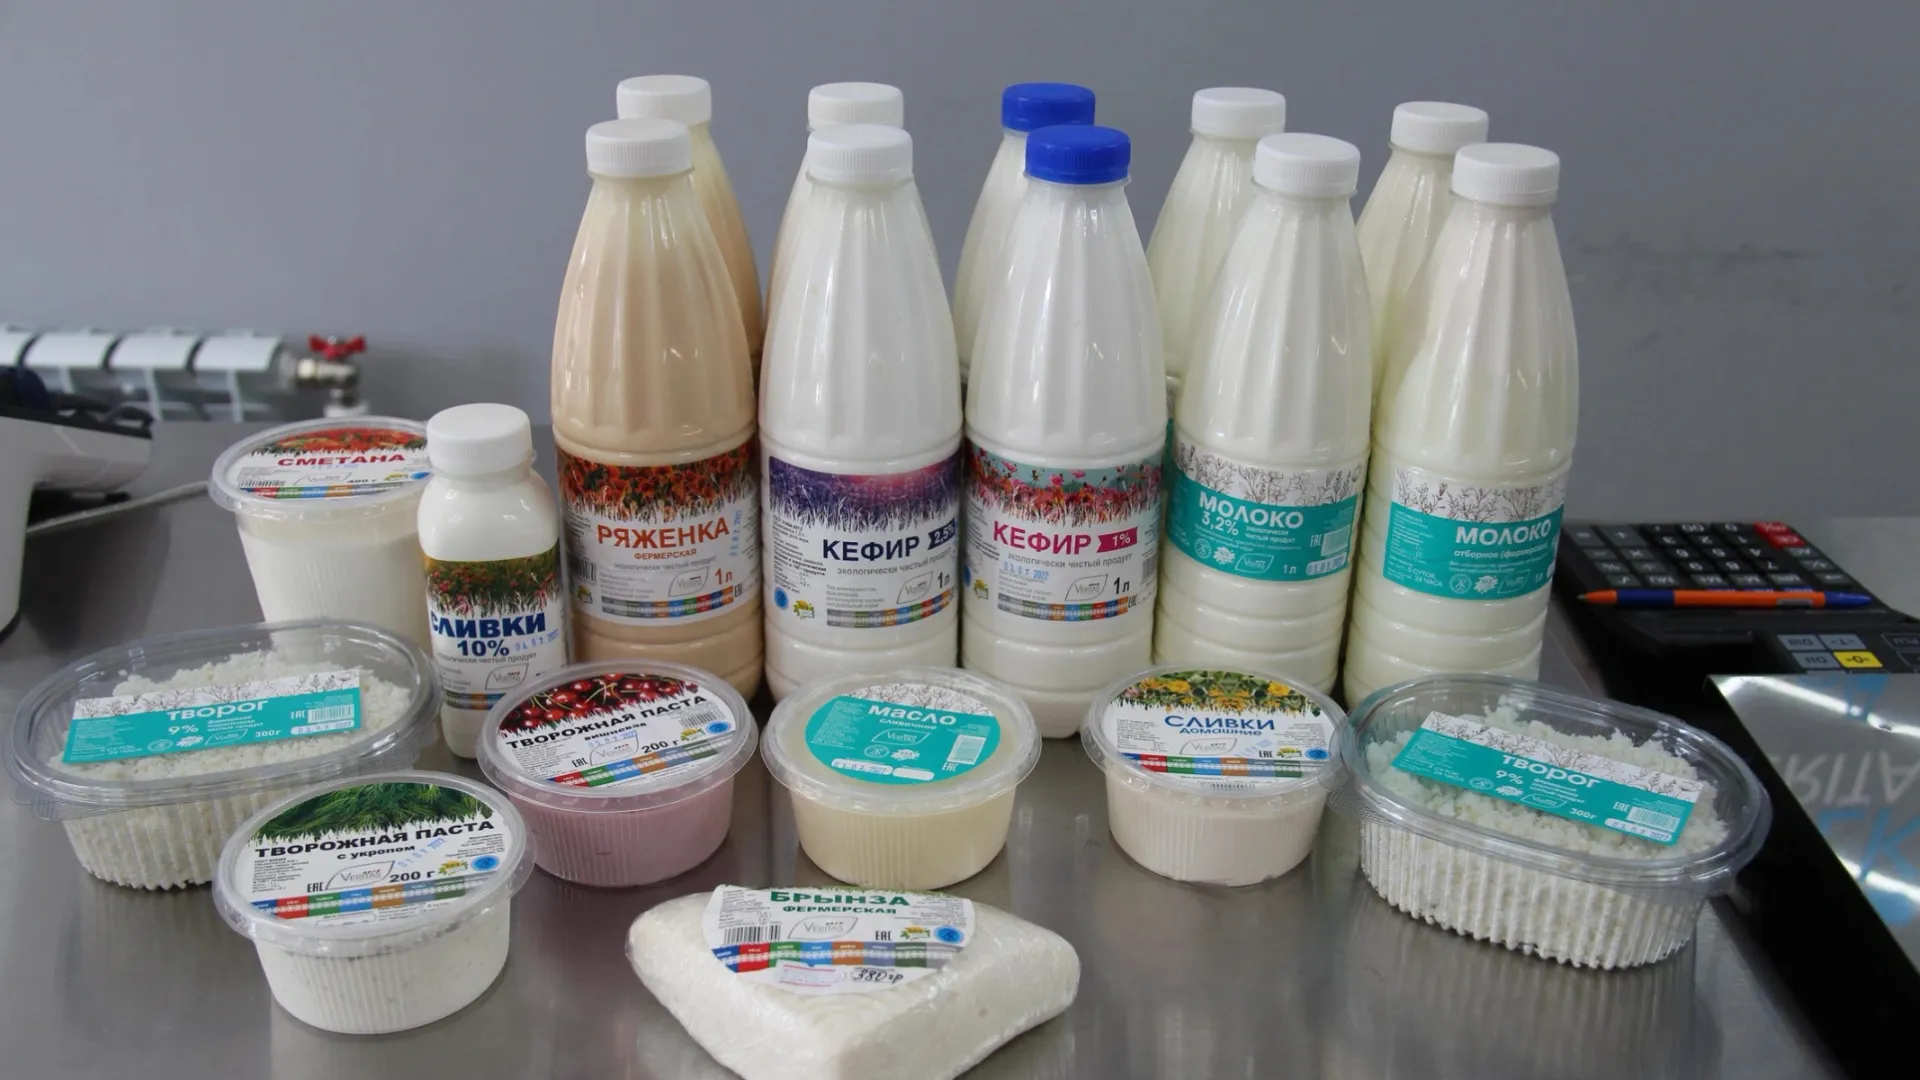 На ферме производится более 25 наименований молочной продукции. Фото: t.me/gubadm89